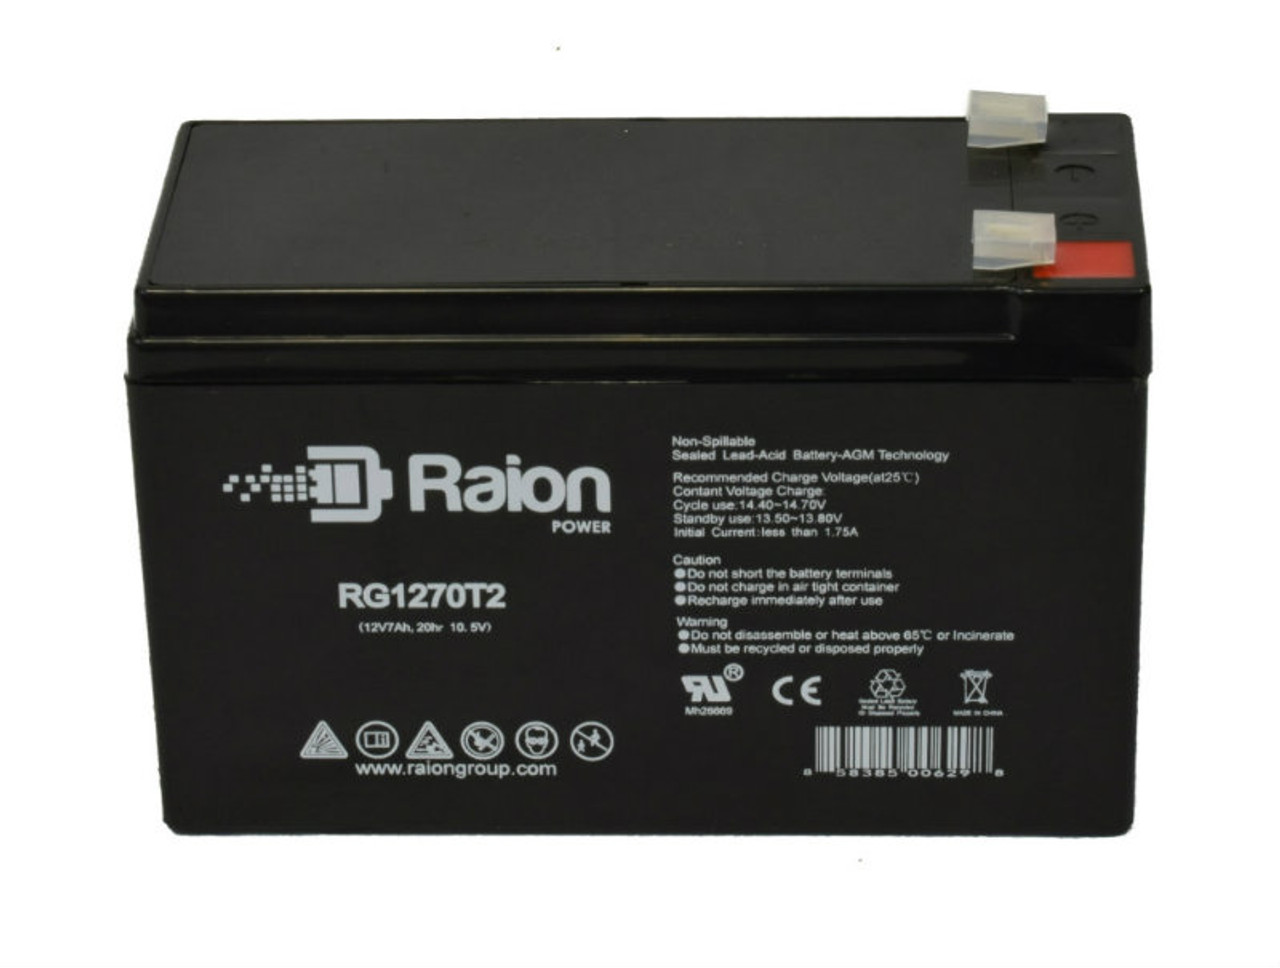 Raion Power RG1270T1 12V 7Ah Lead Acid Battery for Vision CP1270